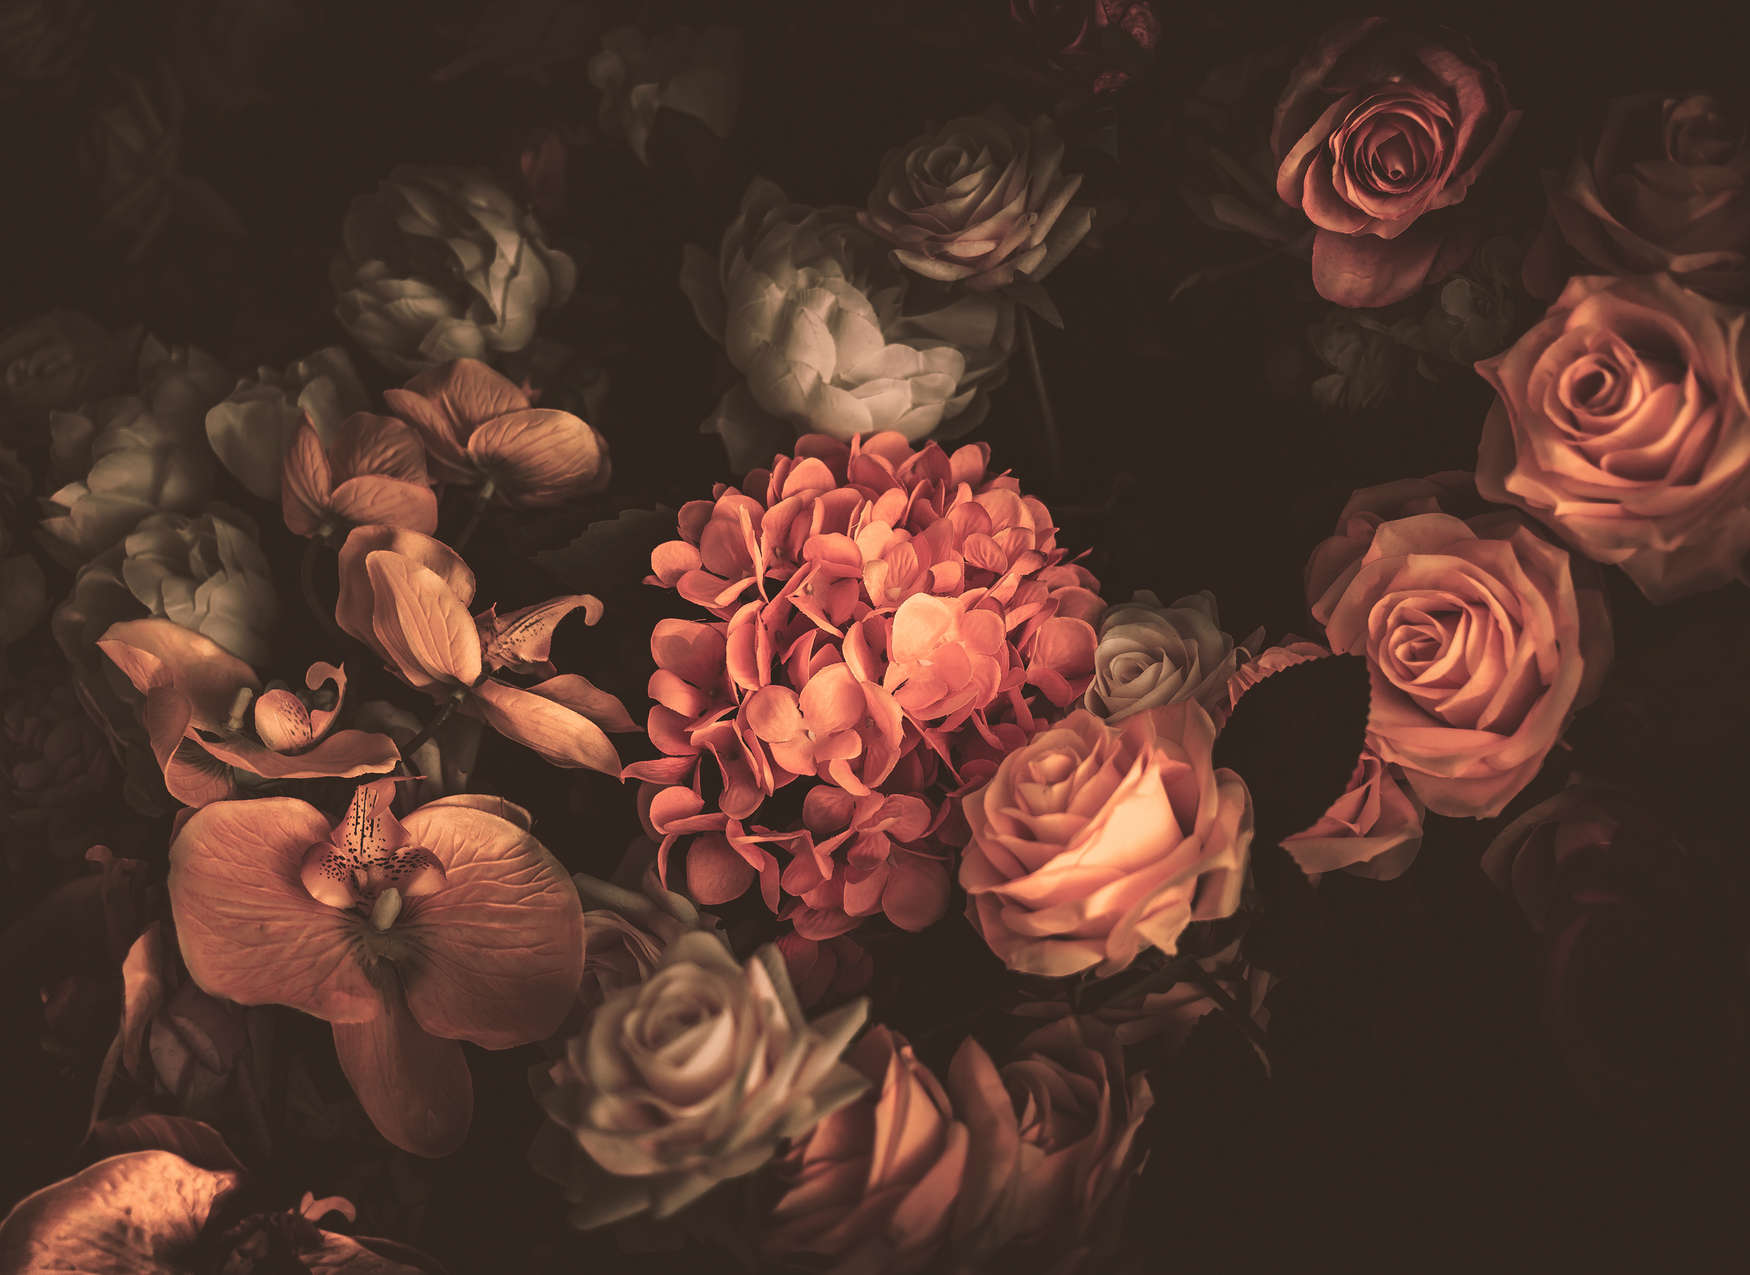             Romantic photo wallpaper with bouquet of flowers - orange, pink, black
        